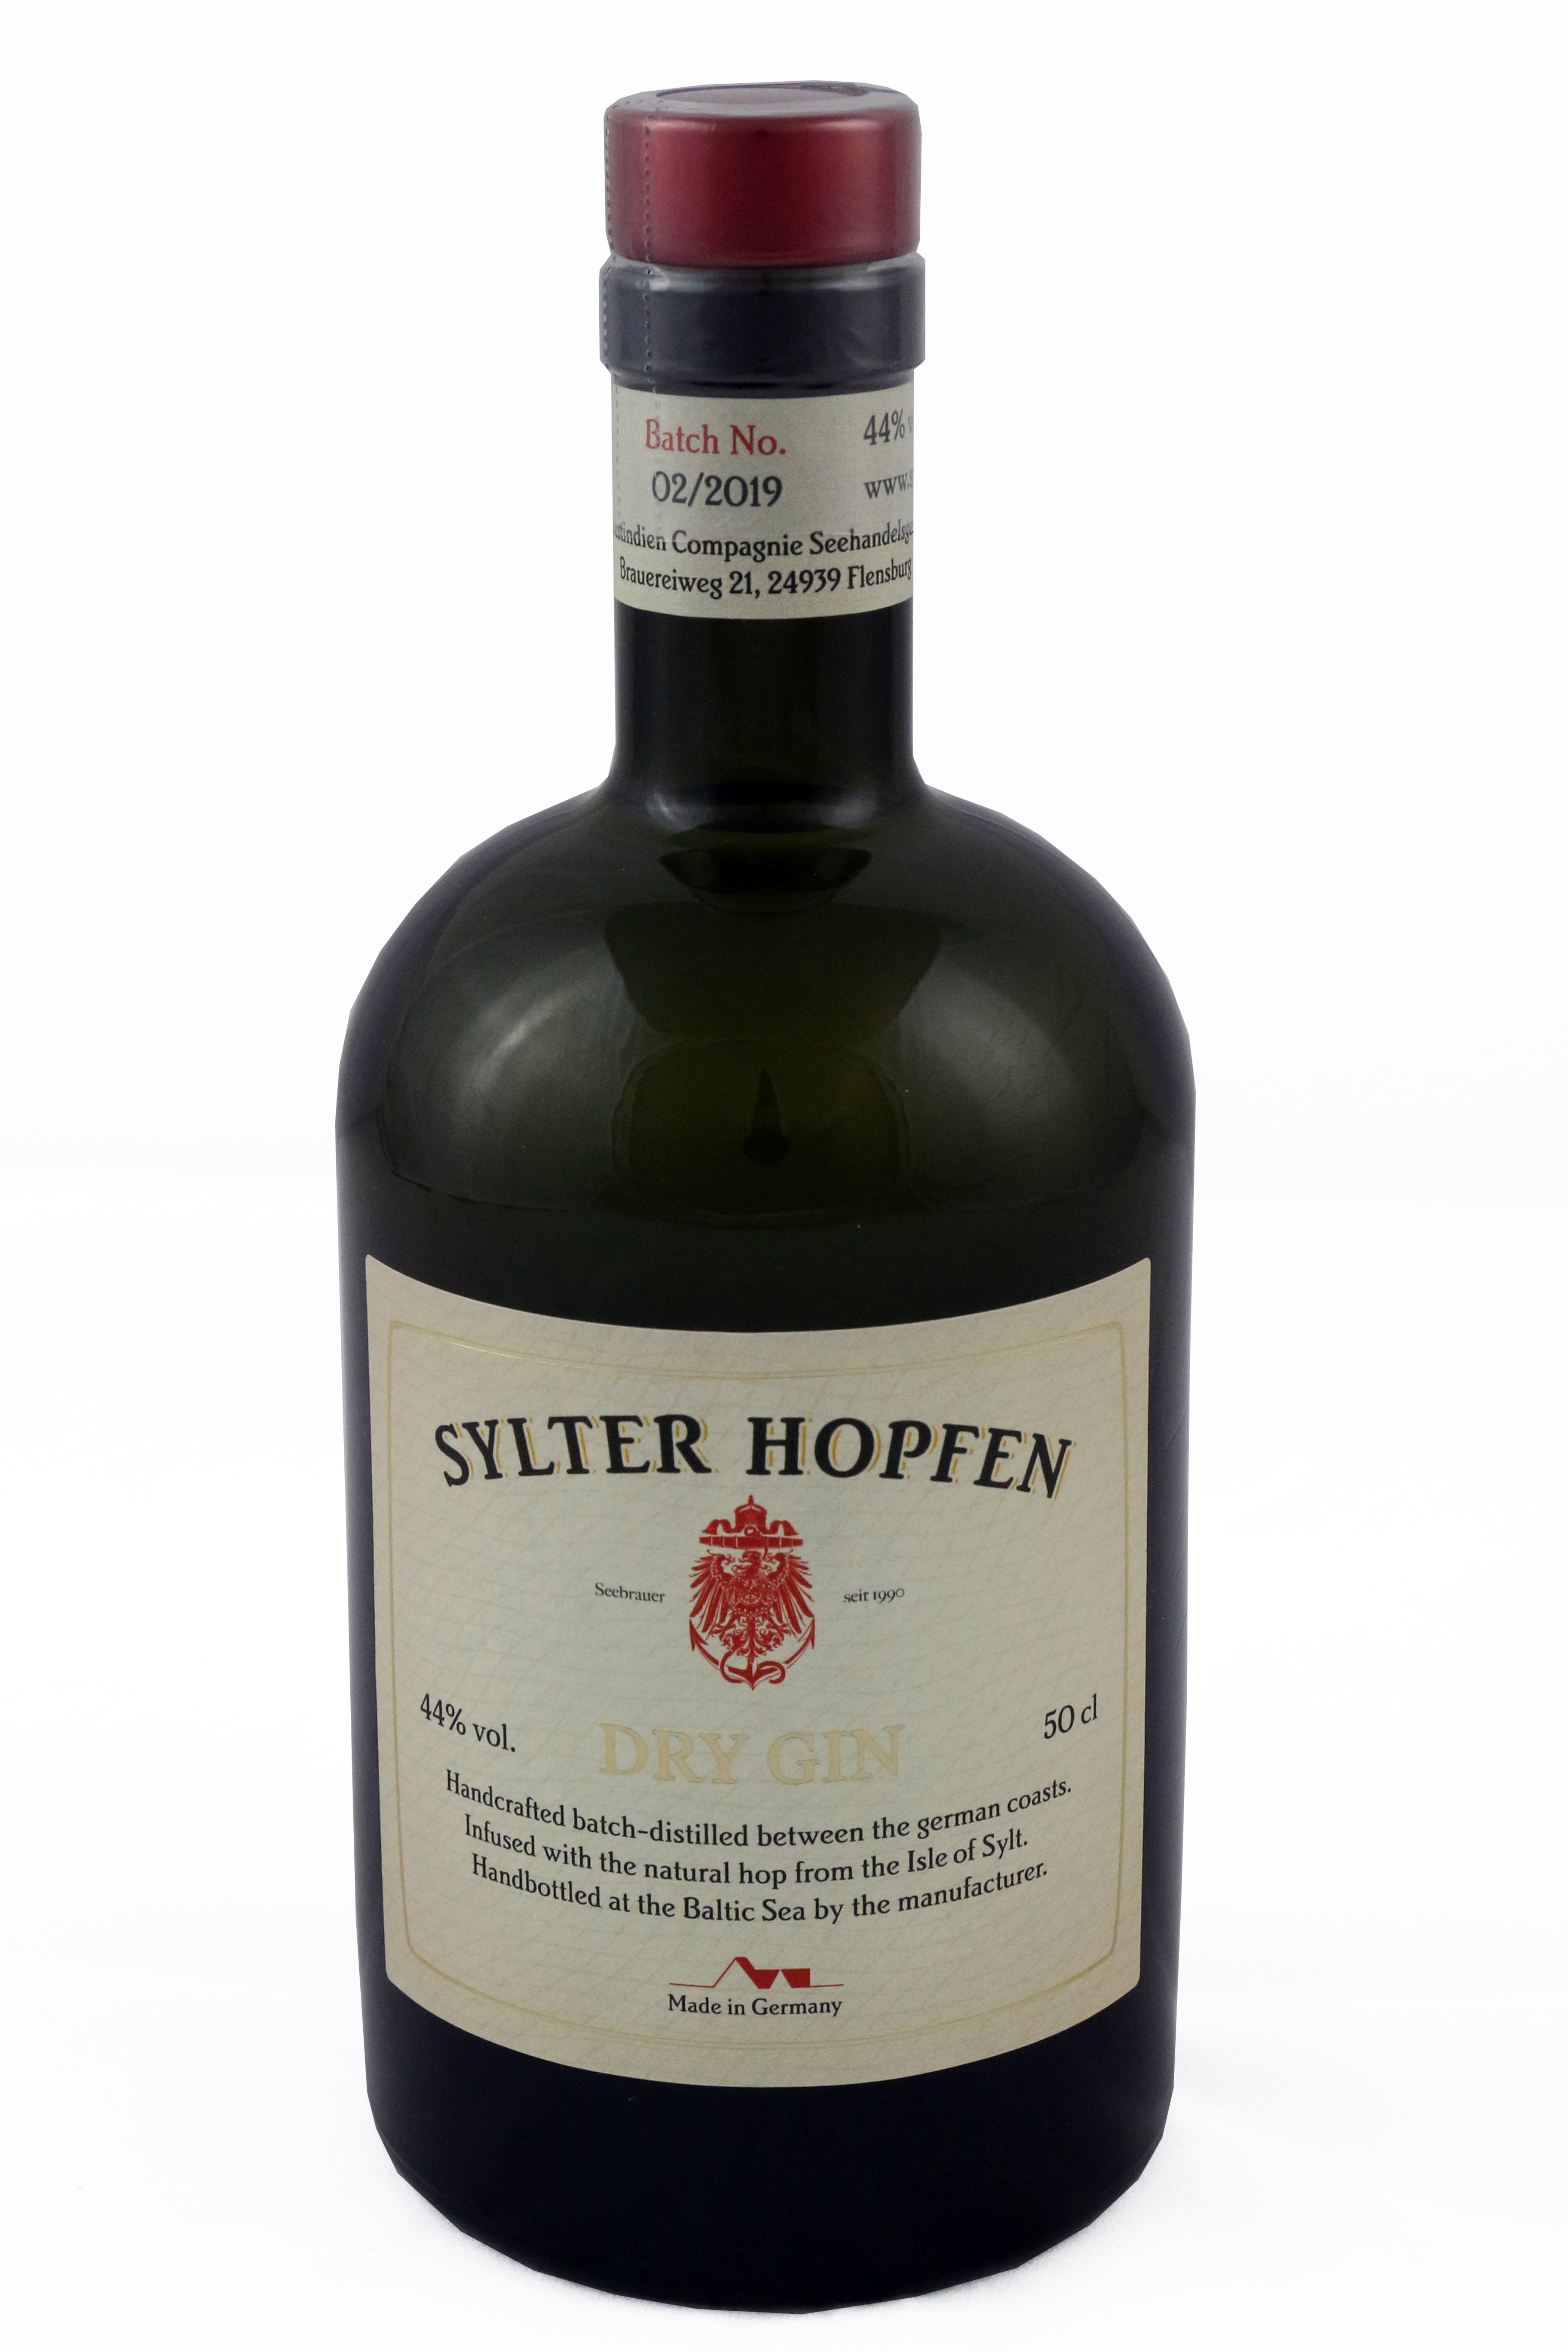 "Sylter Hopfen Dry Gin" 44,0 % vol.